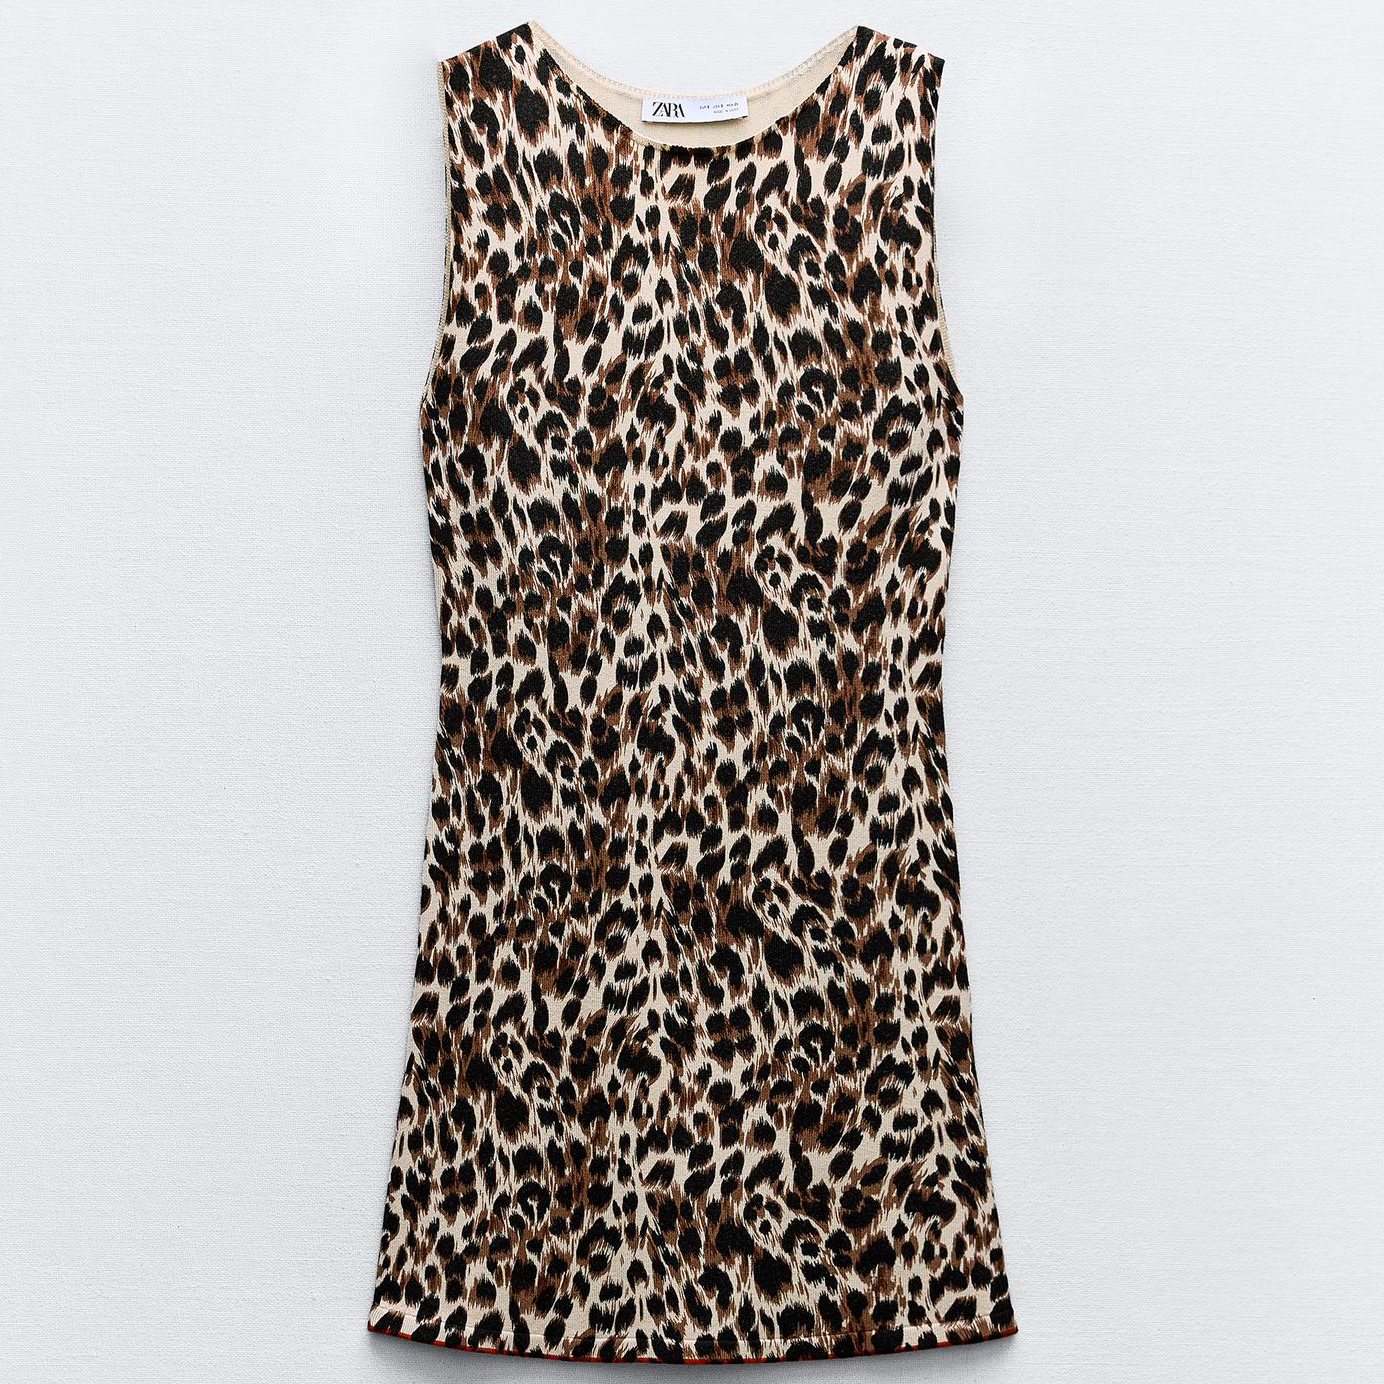 Платье Zara Animal Print Knit, коричневый/мультиколор платье zara print синий